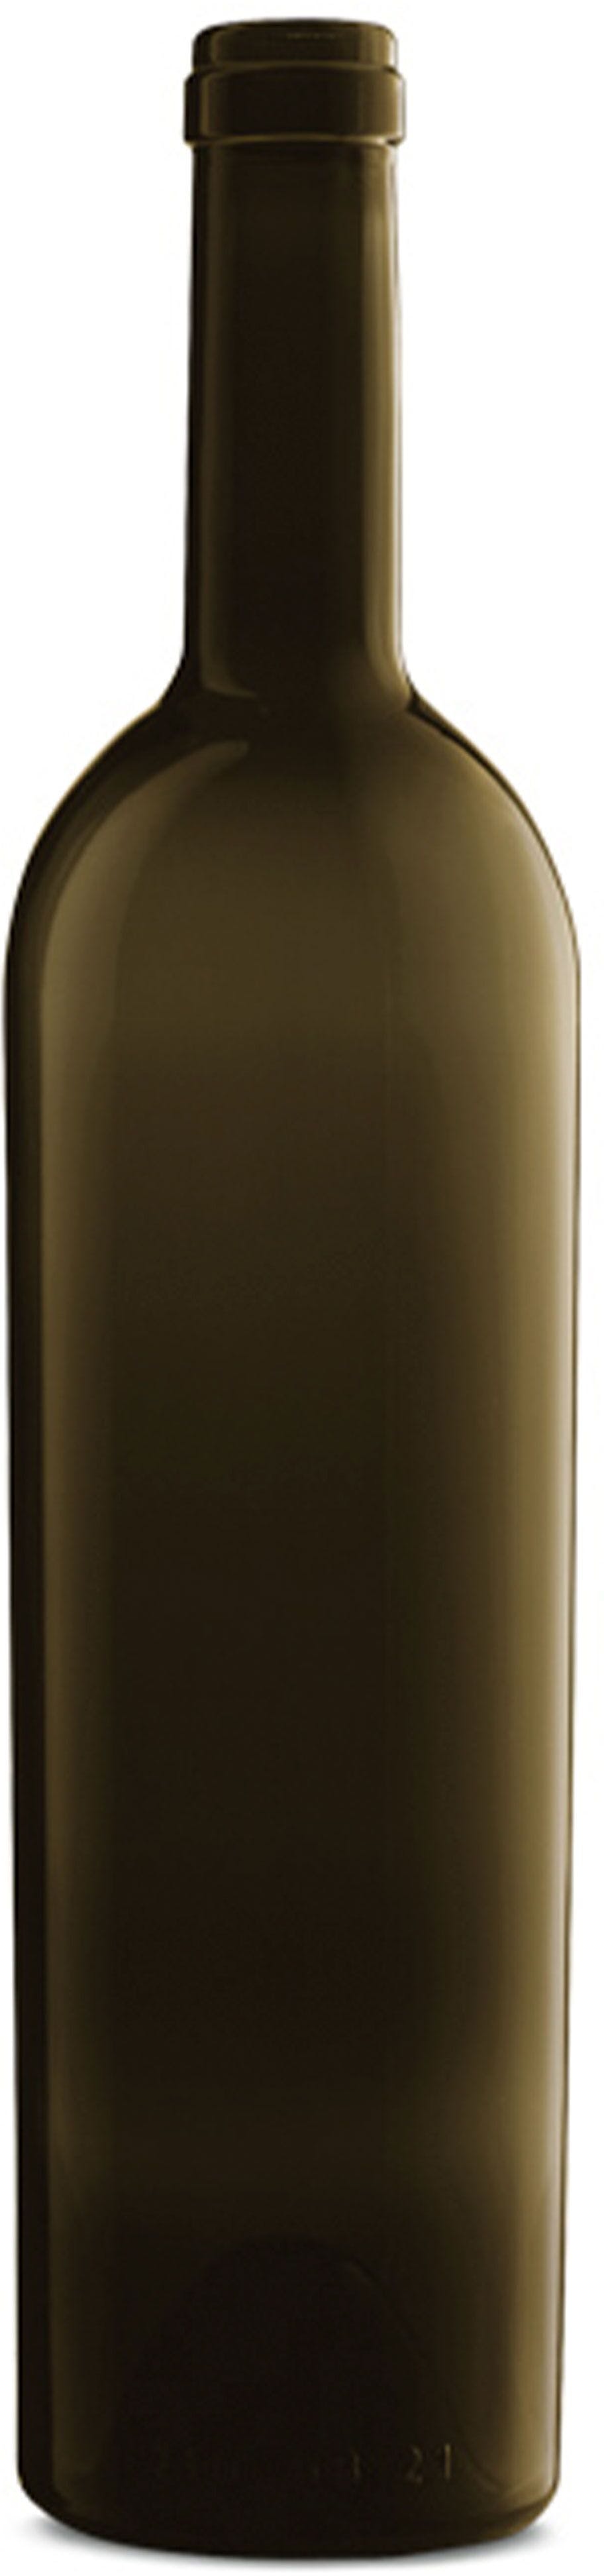 Flasche Bordeaux   ELITE 750 ml BG-Korken